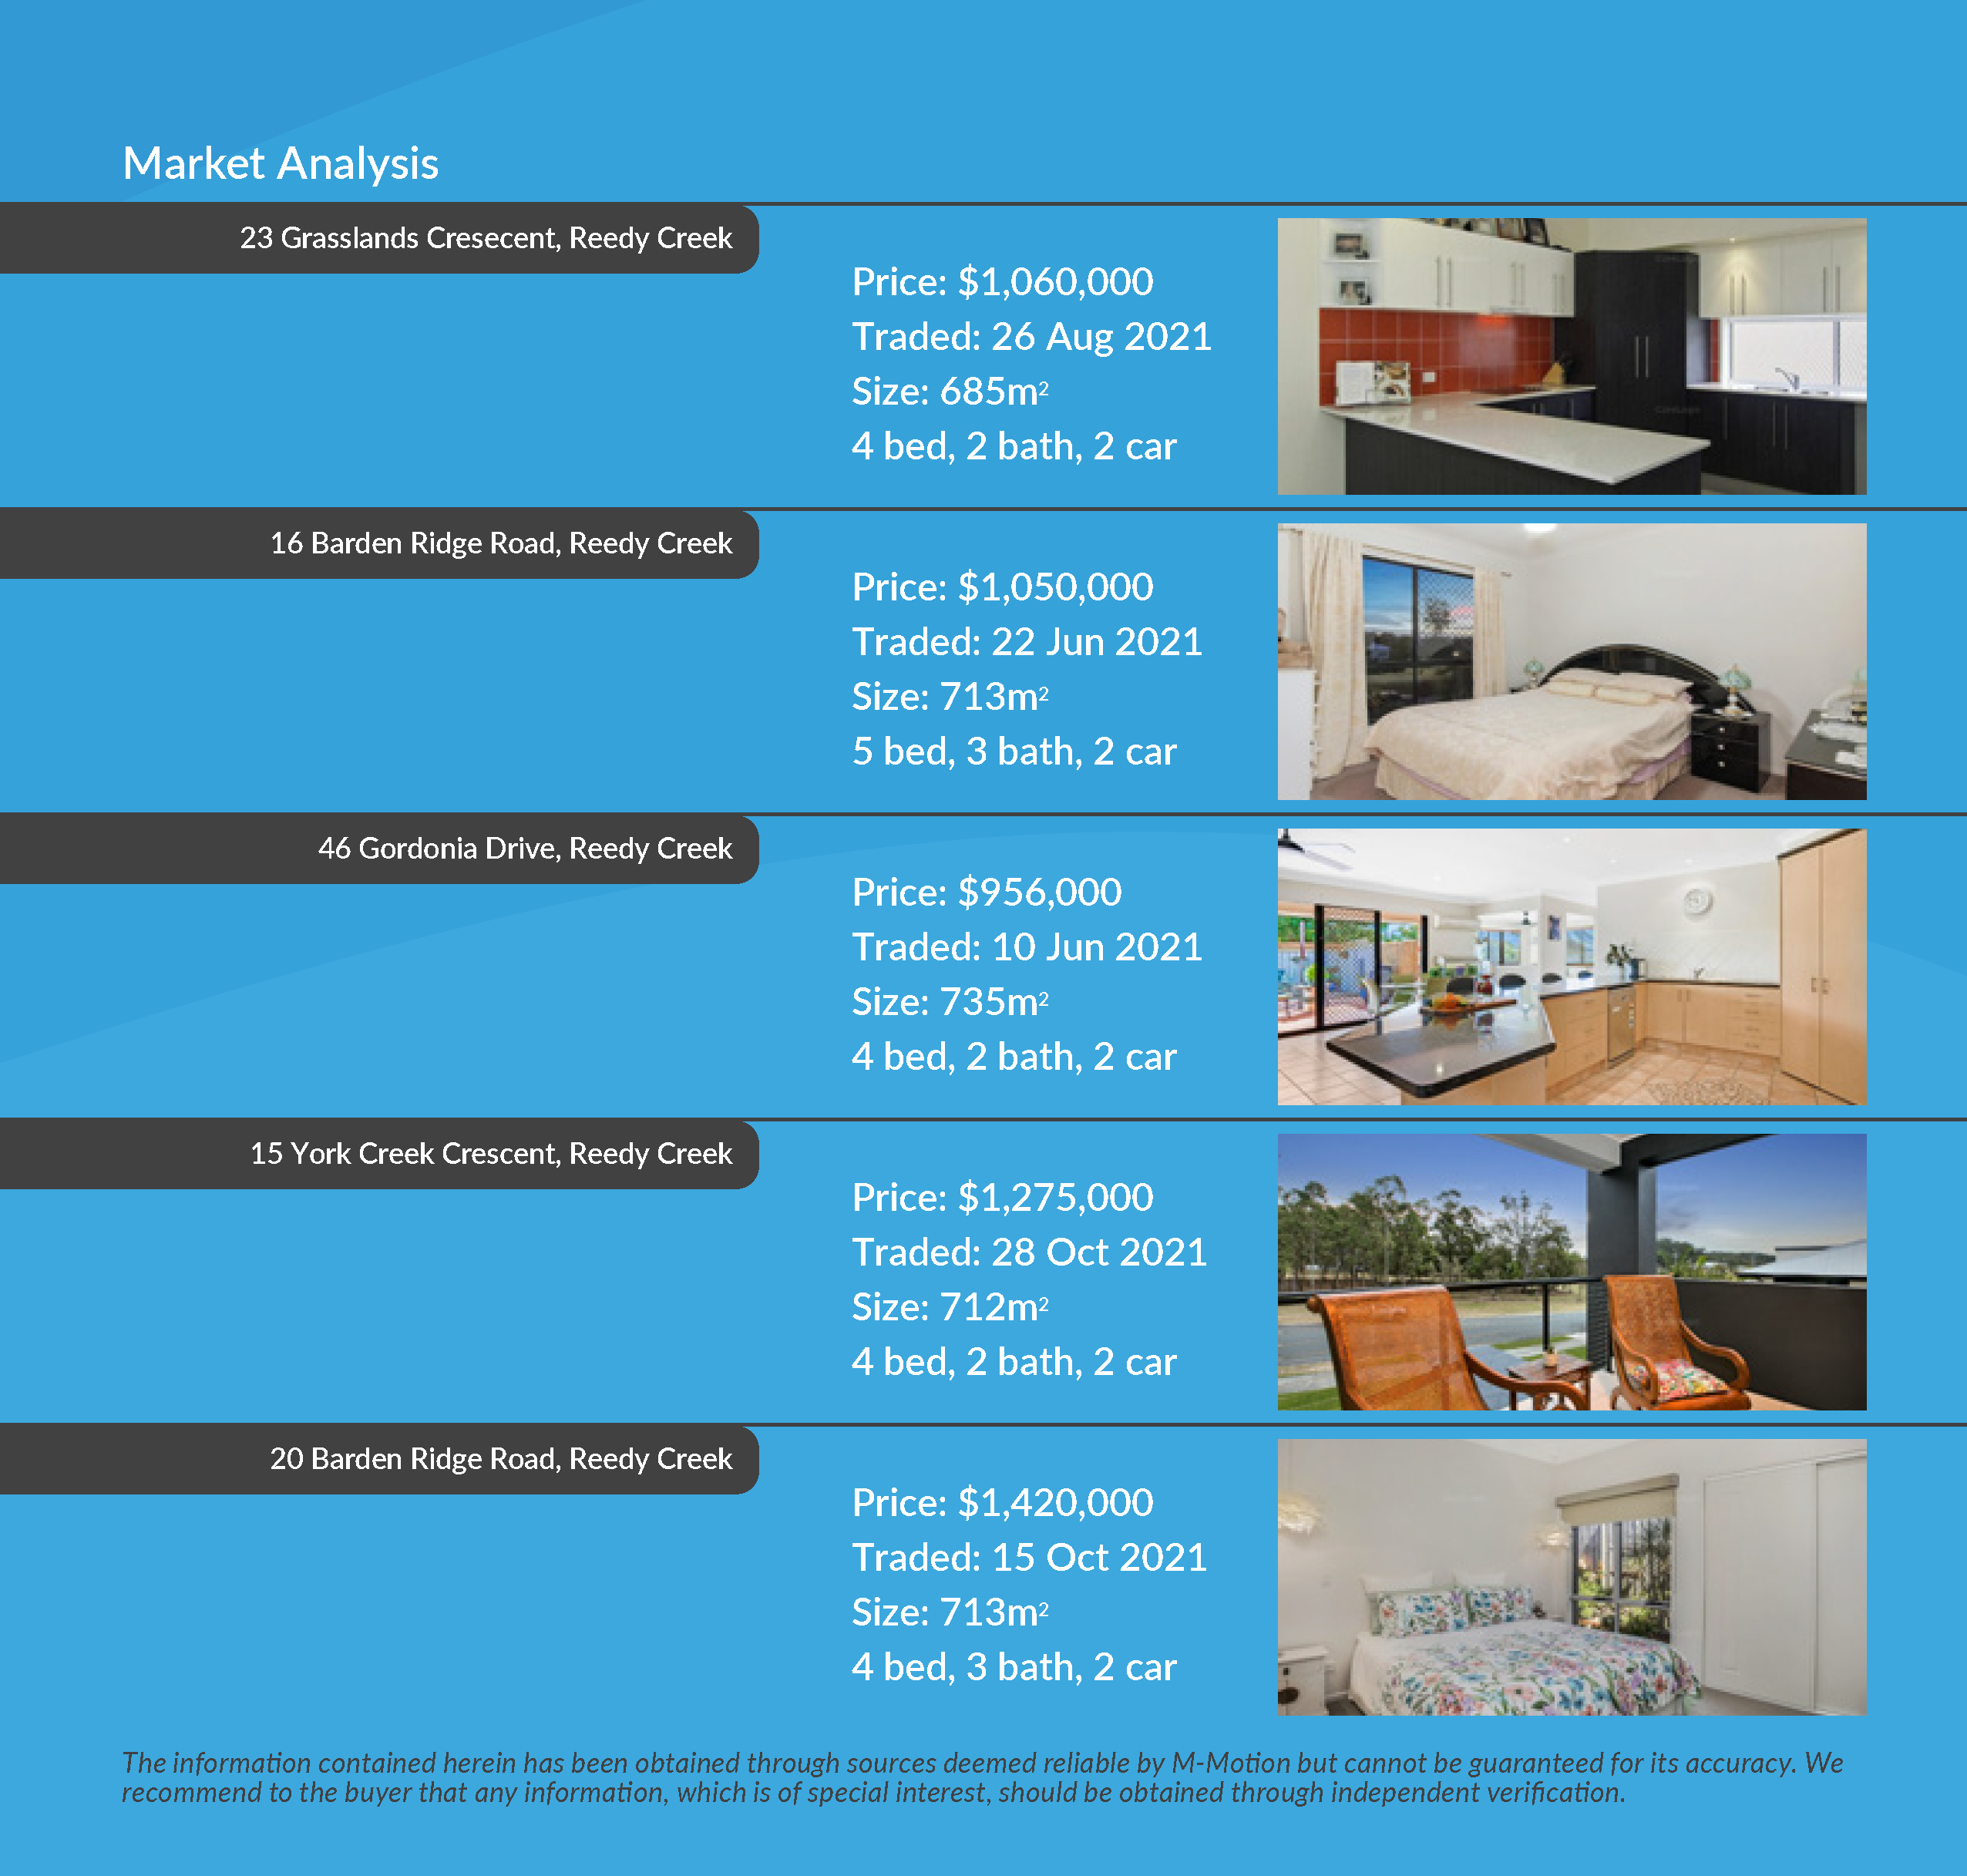 M-Motion Real Estate Agency, 7 Grasslands Crescent Reedy Creek, QLD, 4227, Michael Mahon Best Real Estate Agent Gold Coast Brochure CMA